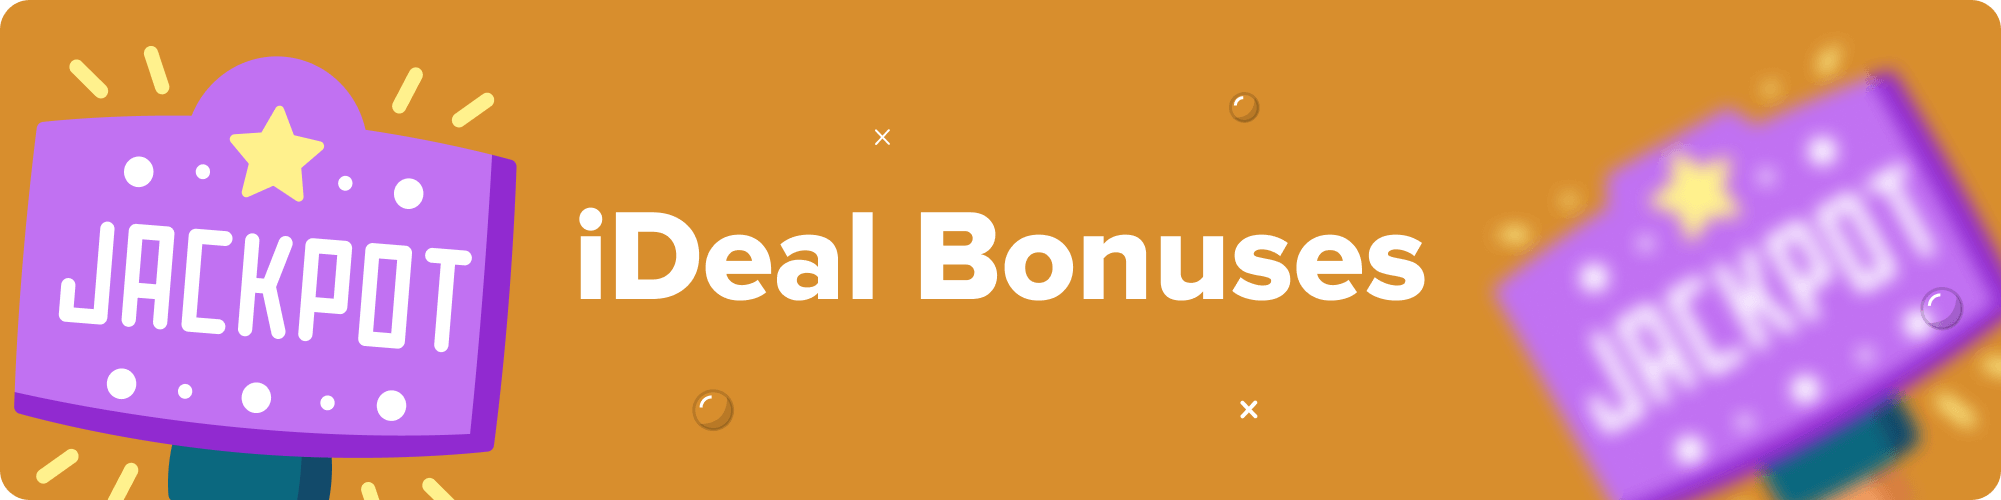 iDeal mobile casino Bonuses